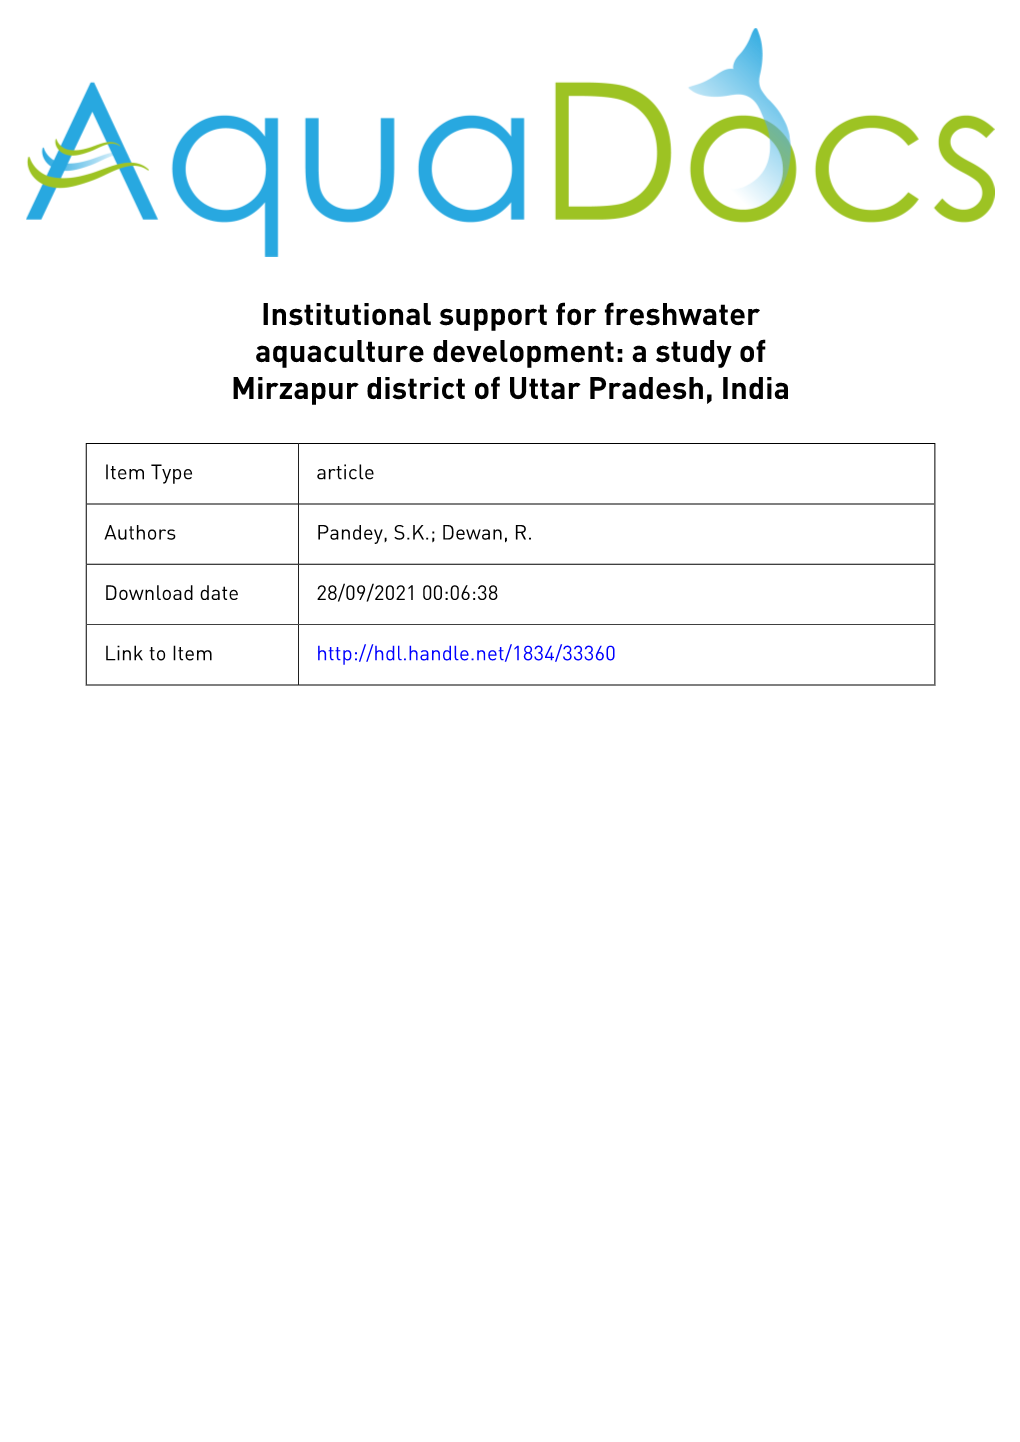 A Study of Mirzapur District of Uttar Pradesh, India